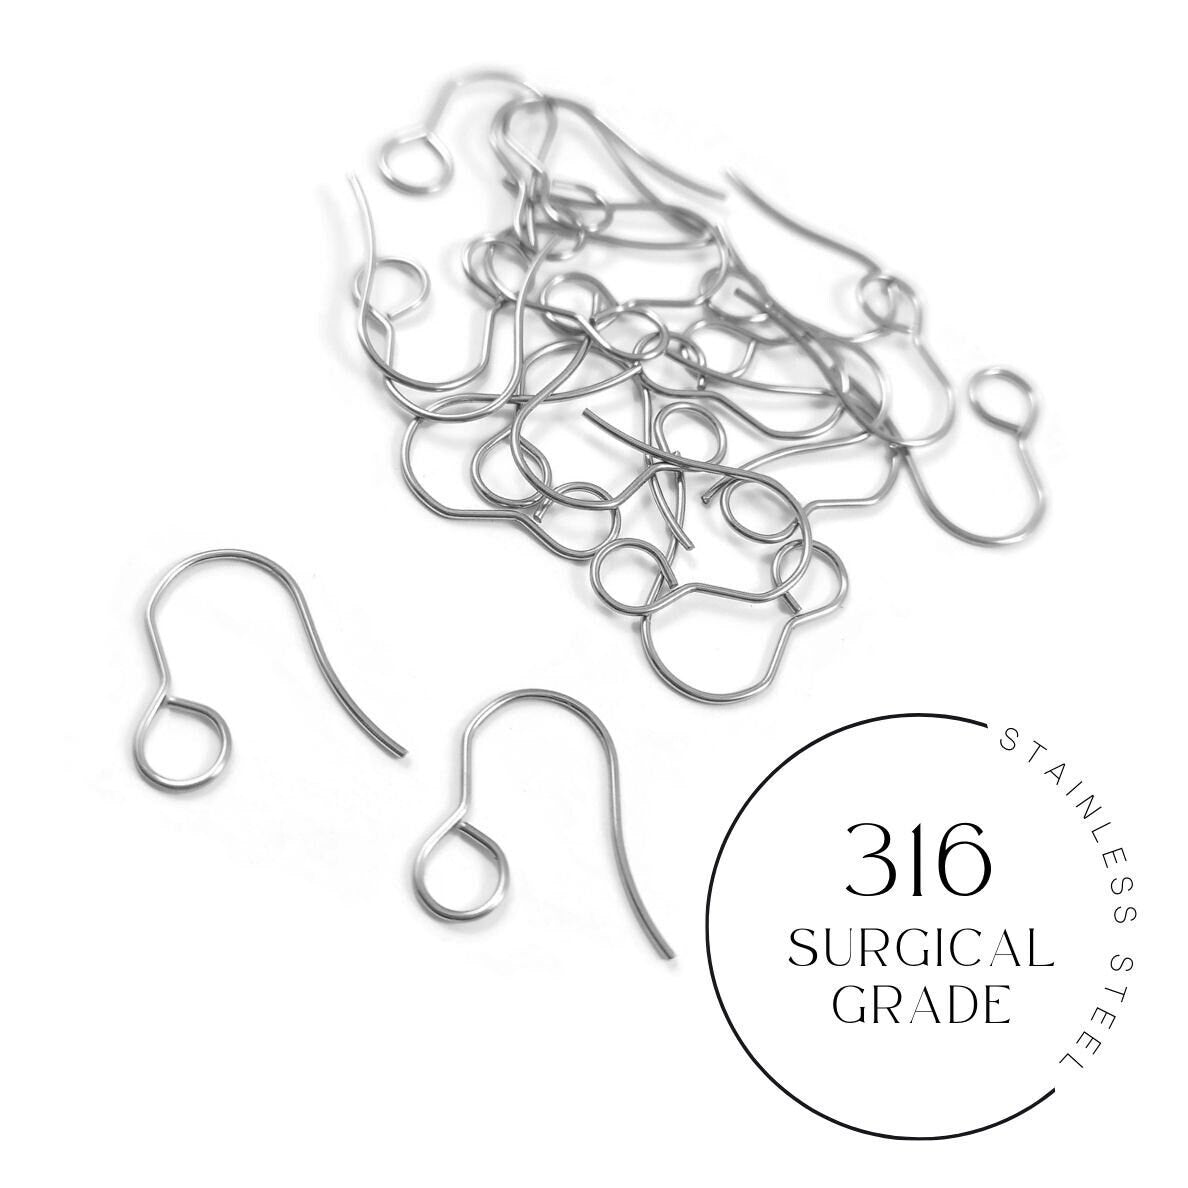 Big hole loop ear wire, Hypoallergenic stainless steel earring hooks, Jewelry making findings